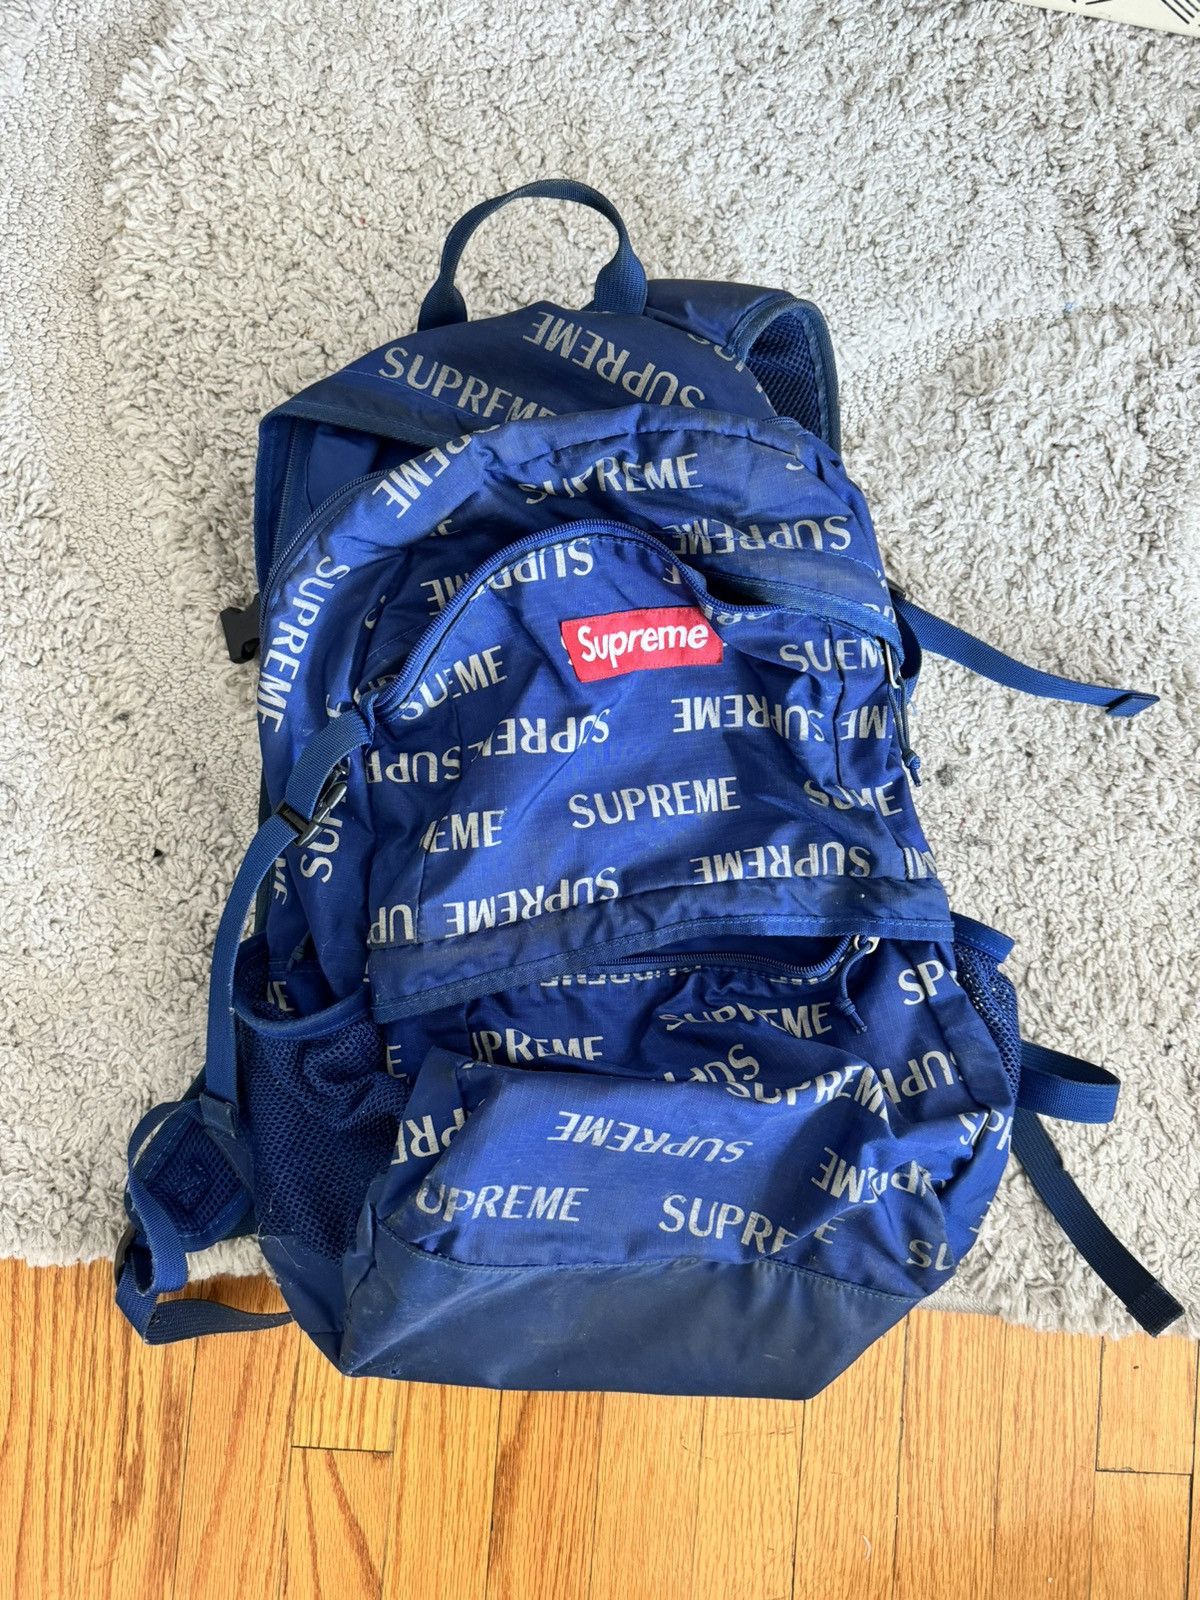 Supreme Supreme 3m reflective repeat backpack | Grailed